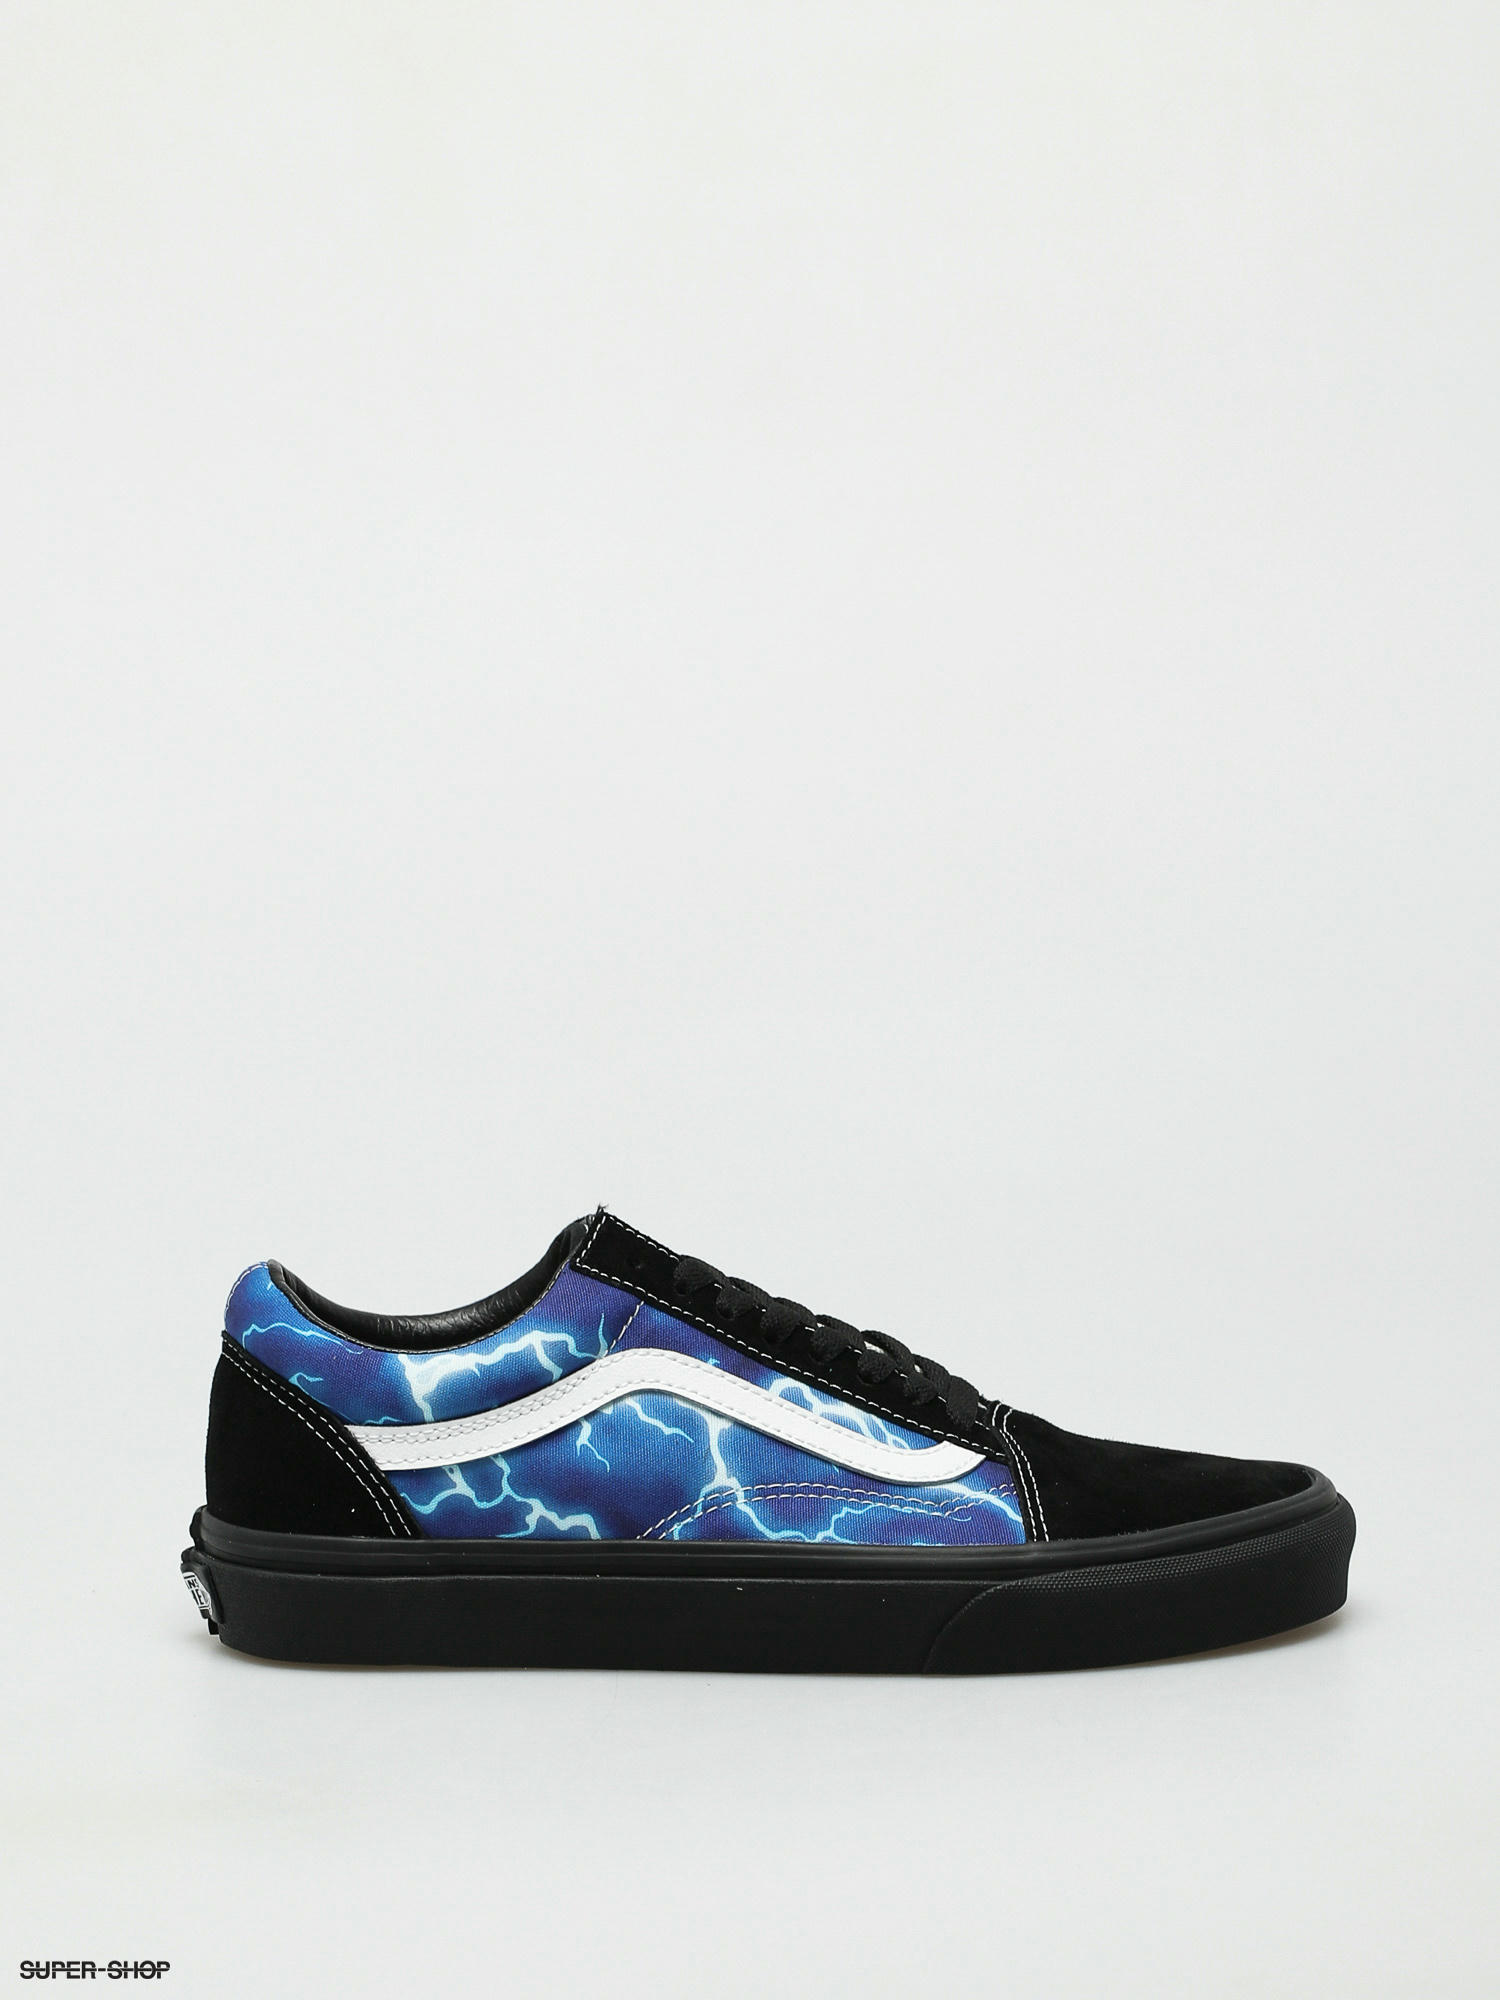 vans shoes black and blue